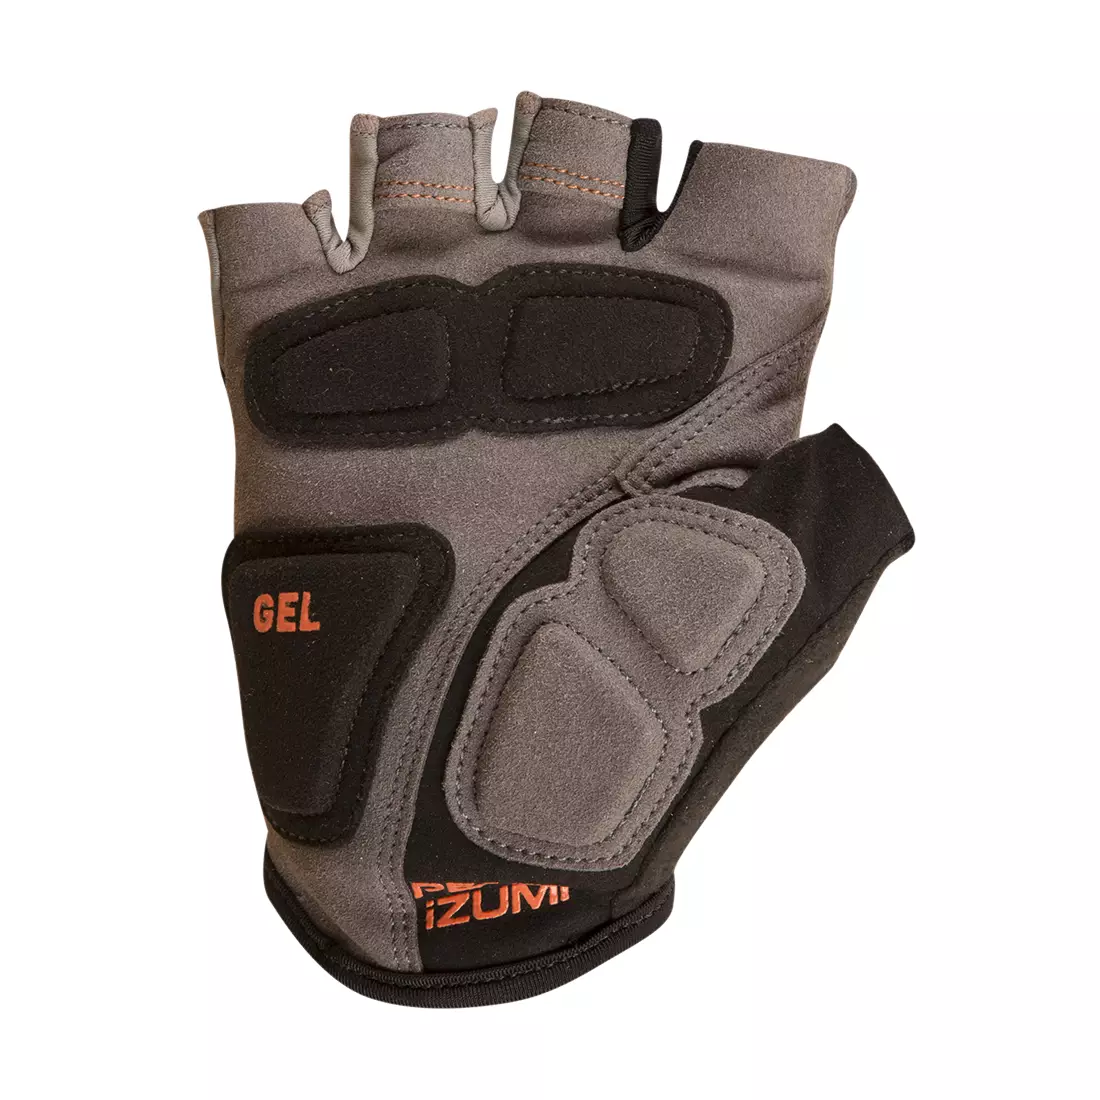 PEARL IZUMI ELITE women's cycling gloves, GEL 14241602-021 black